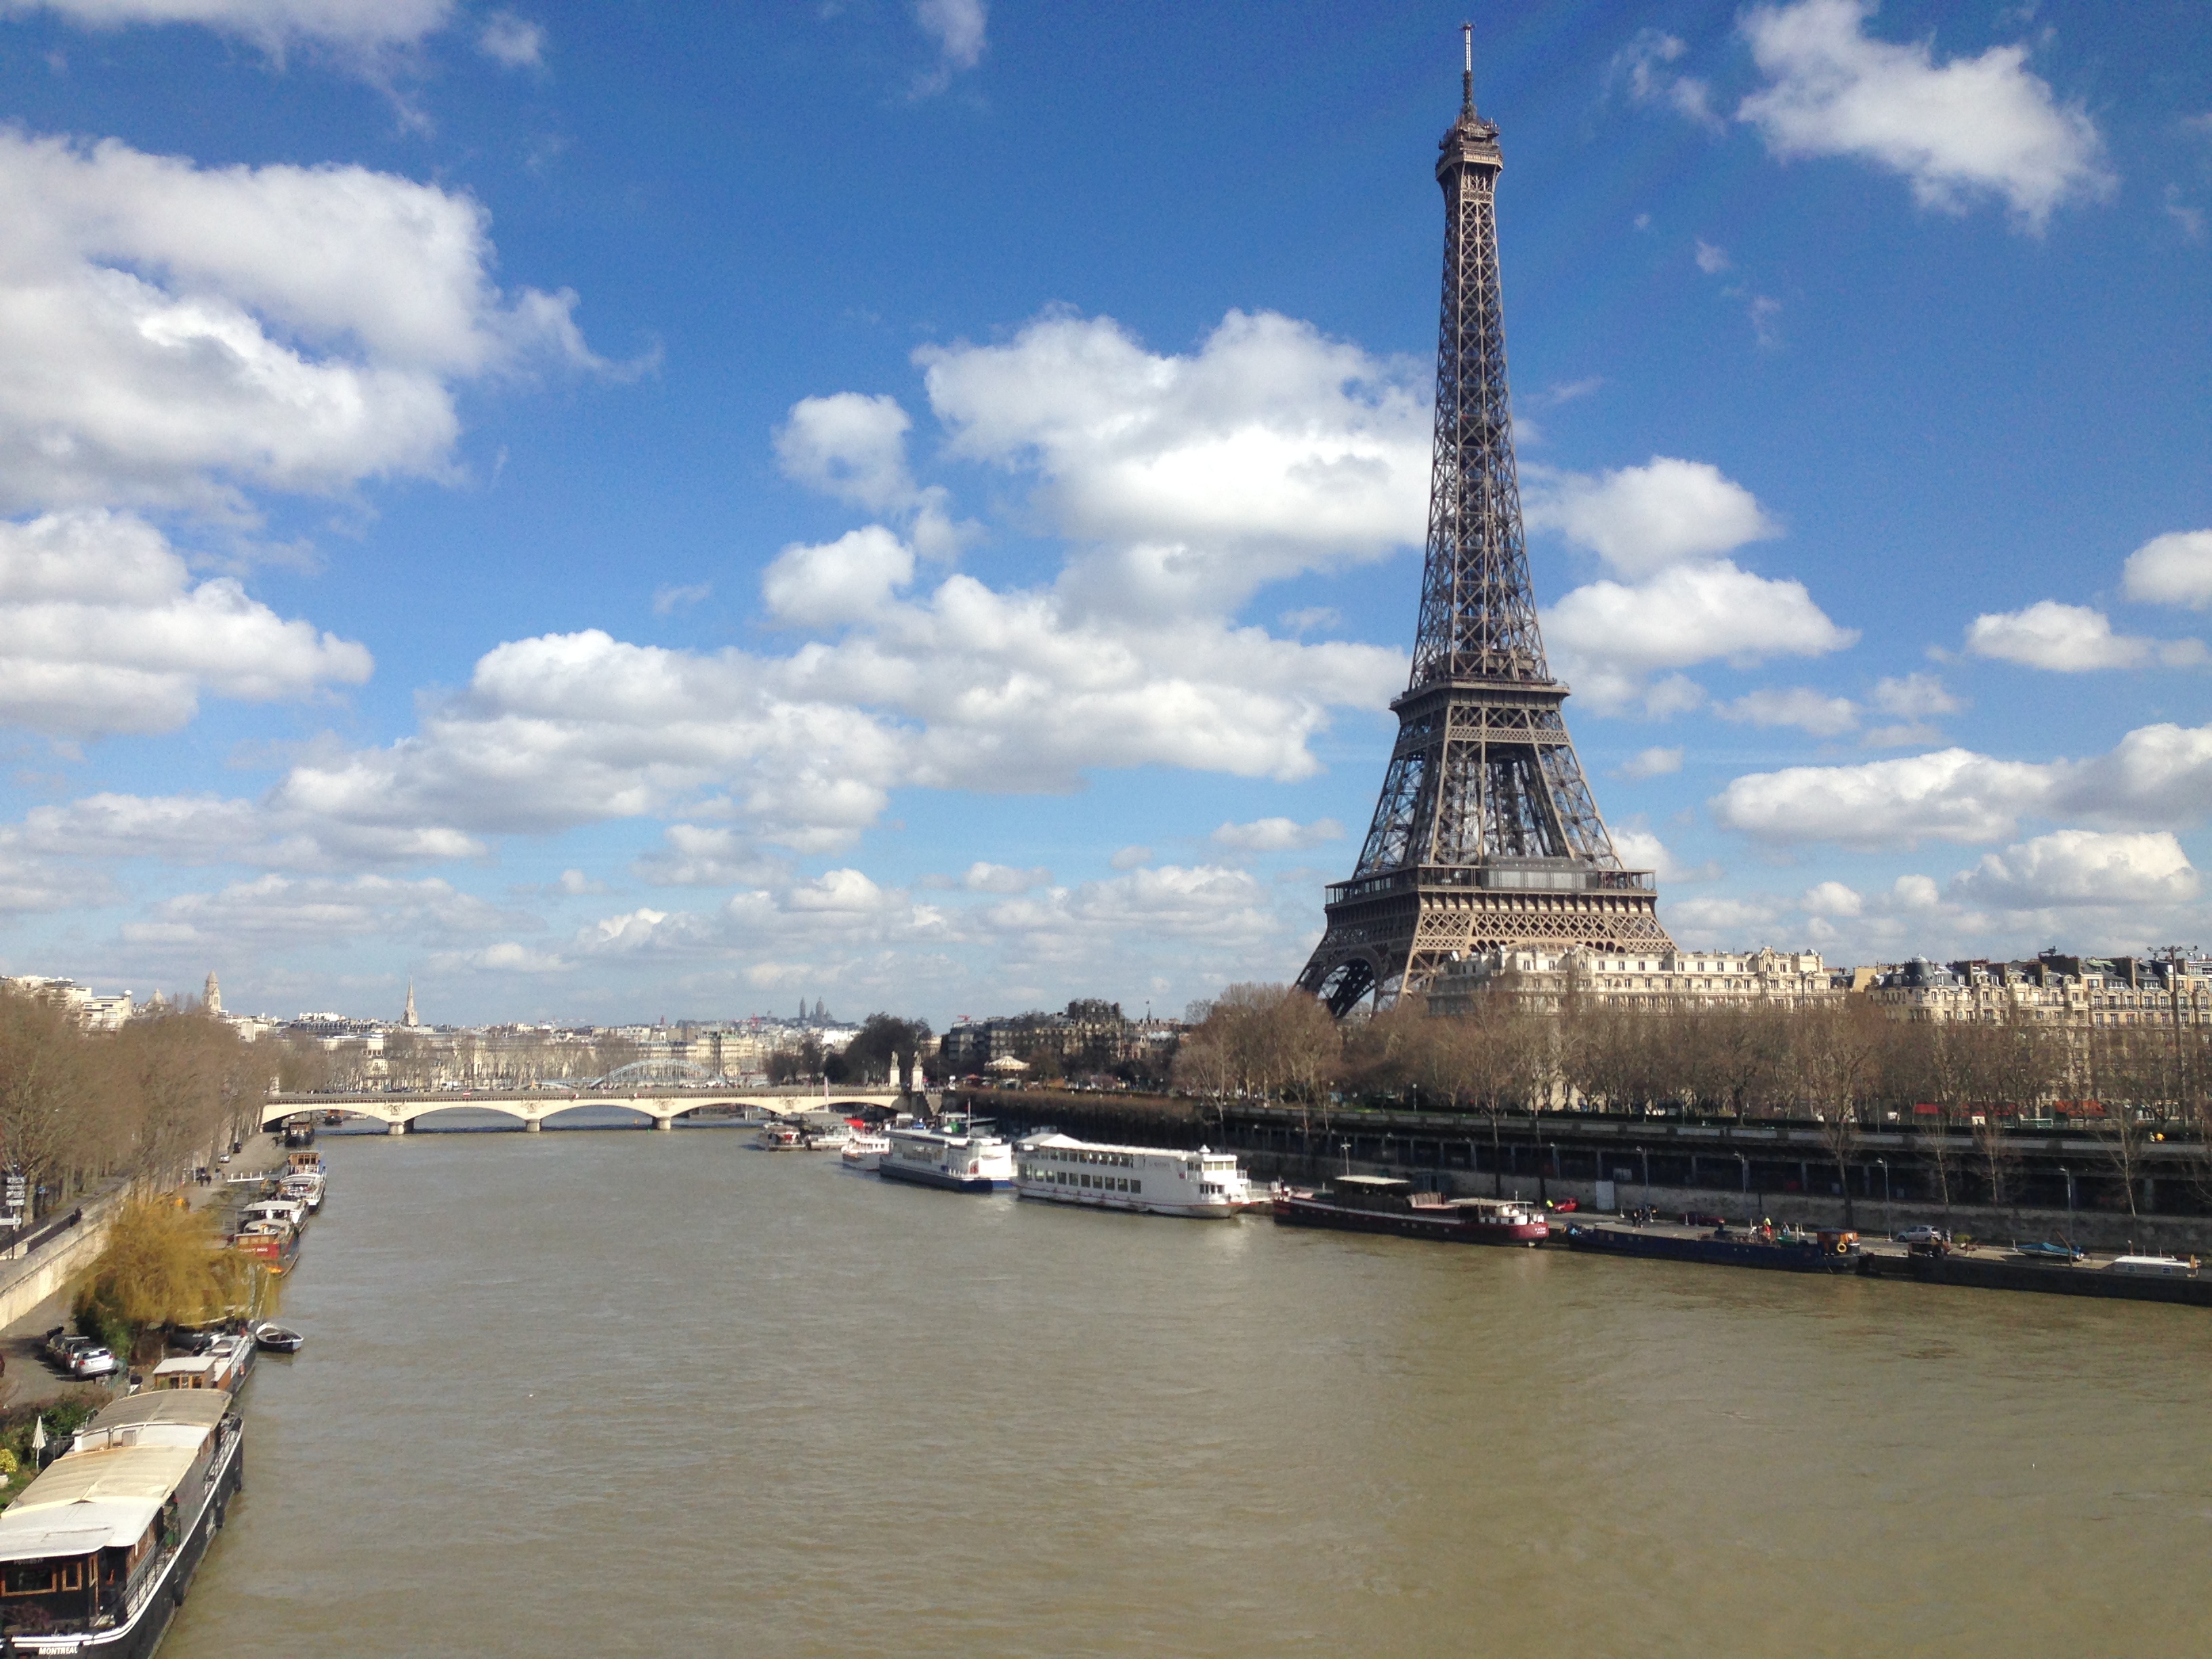 Eiffel_Tower_by_the_Seine_river,_Paris,_2_March_2014.jpg